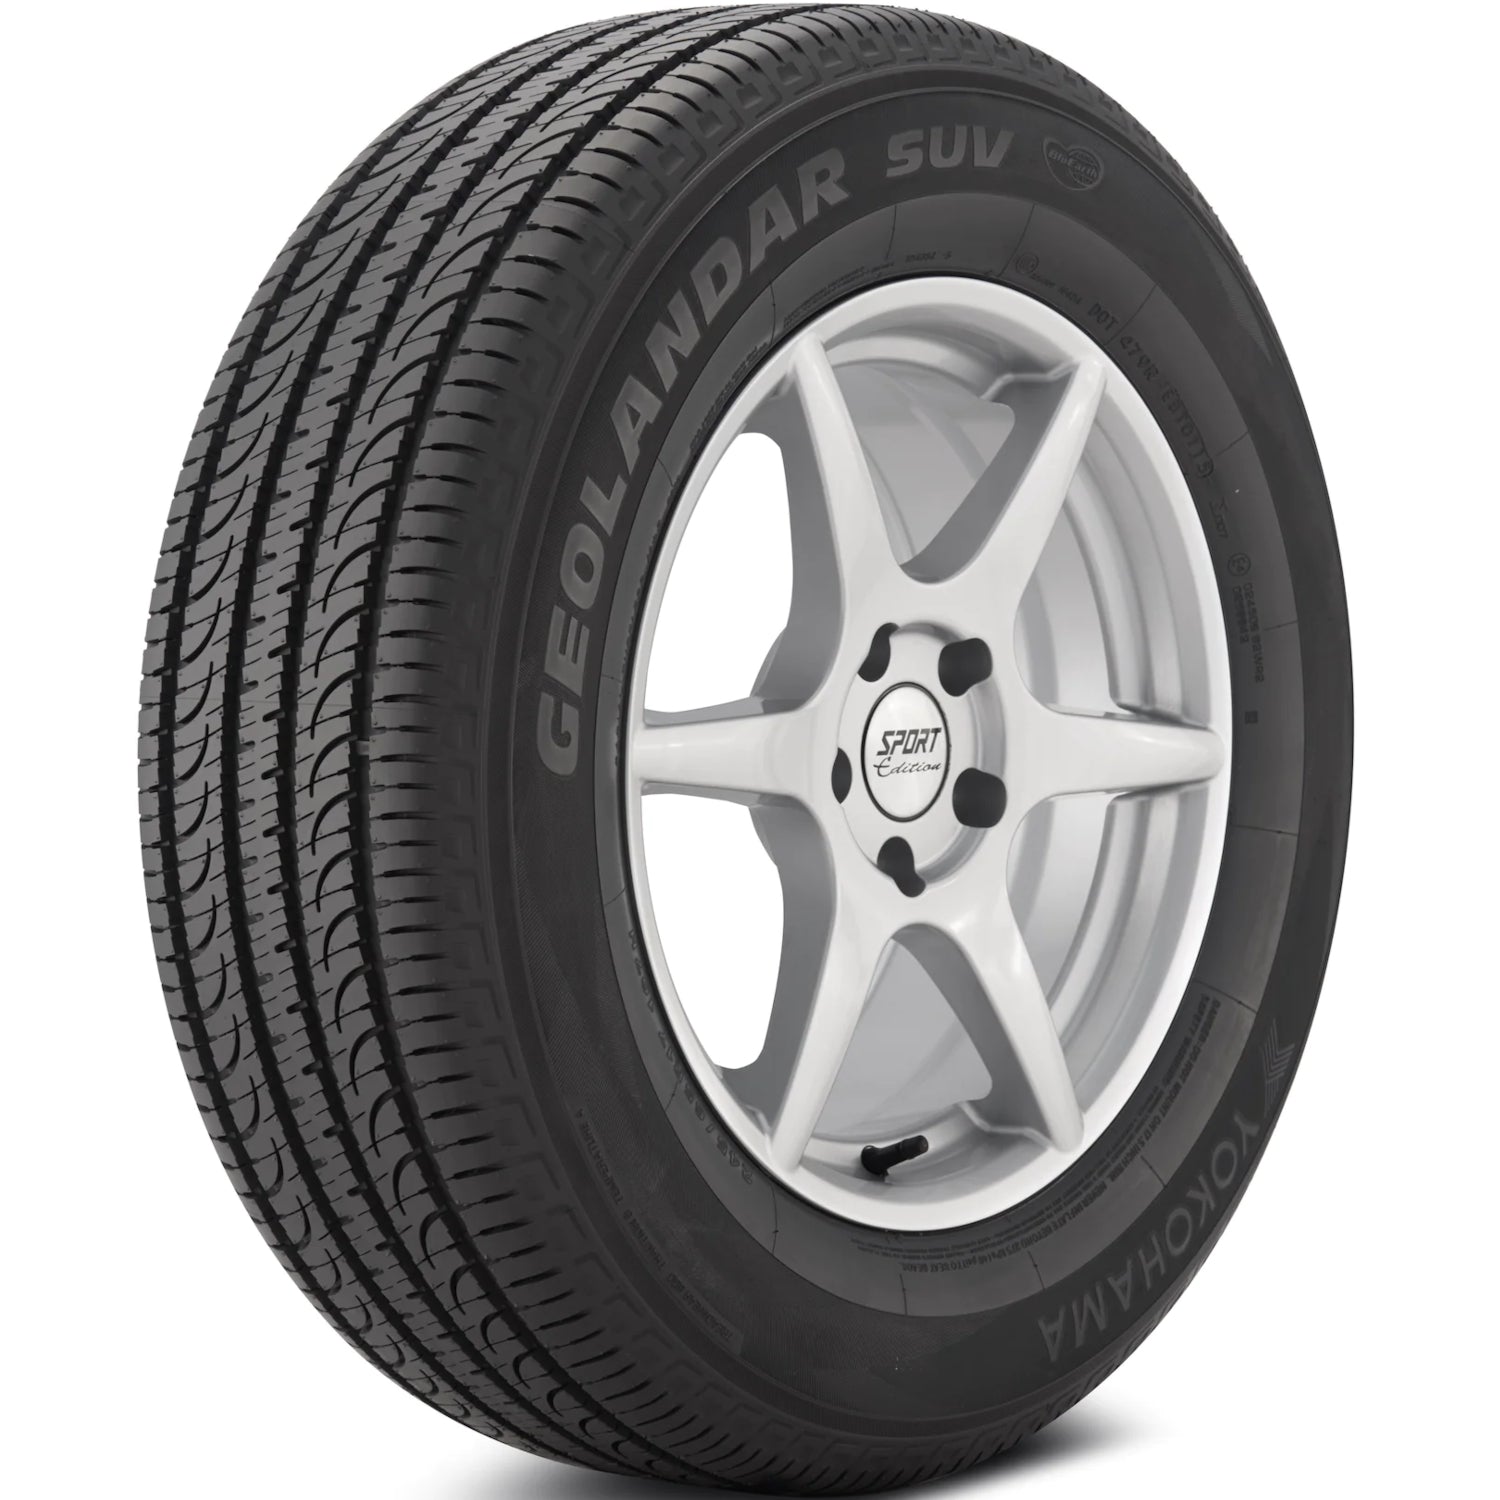 YOKOHAMA GEOLANDAR G055 215/70R17 (28.7X8.6R 17) Tires